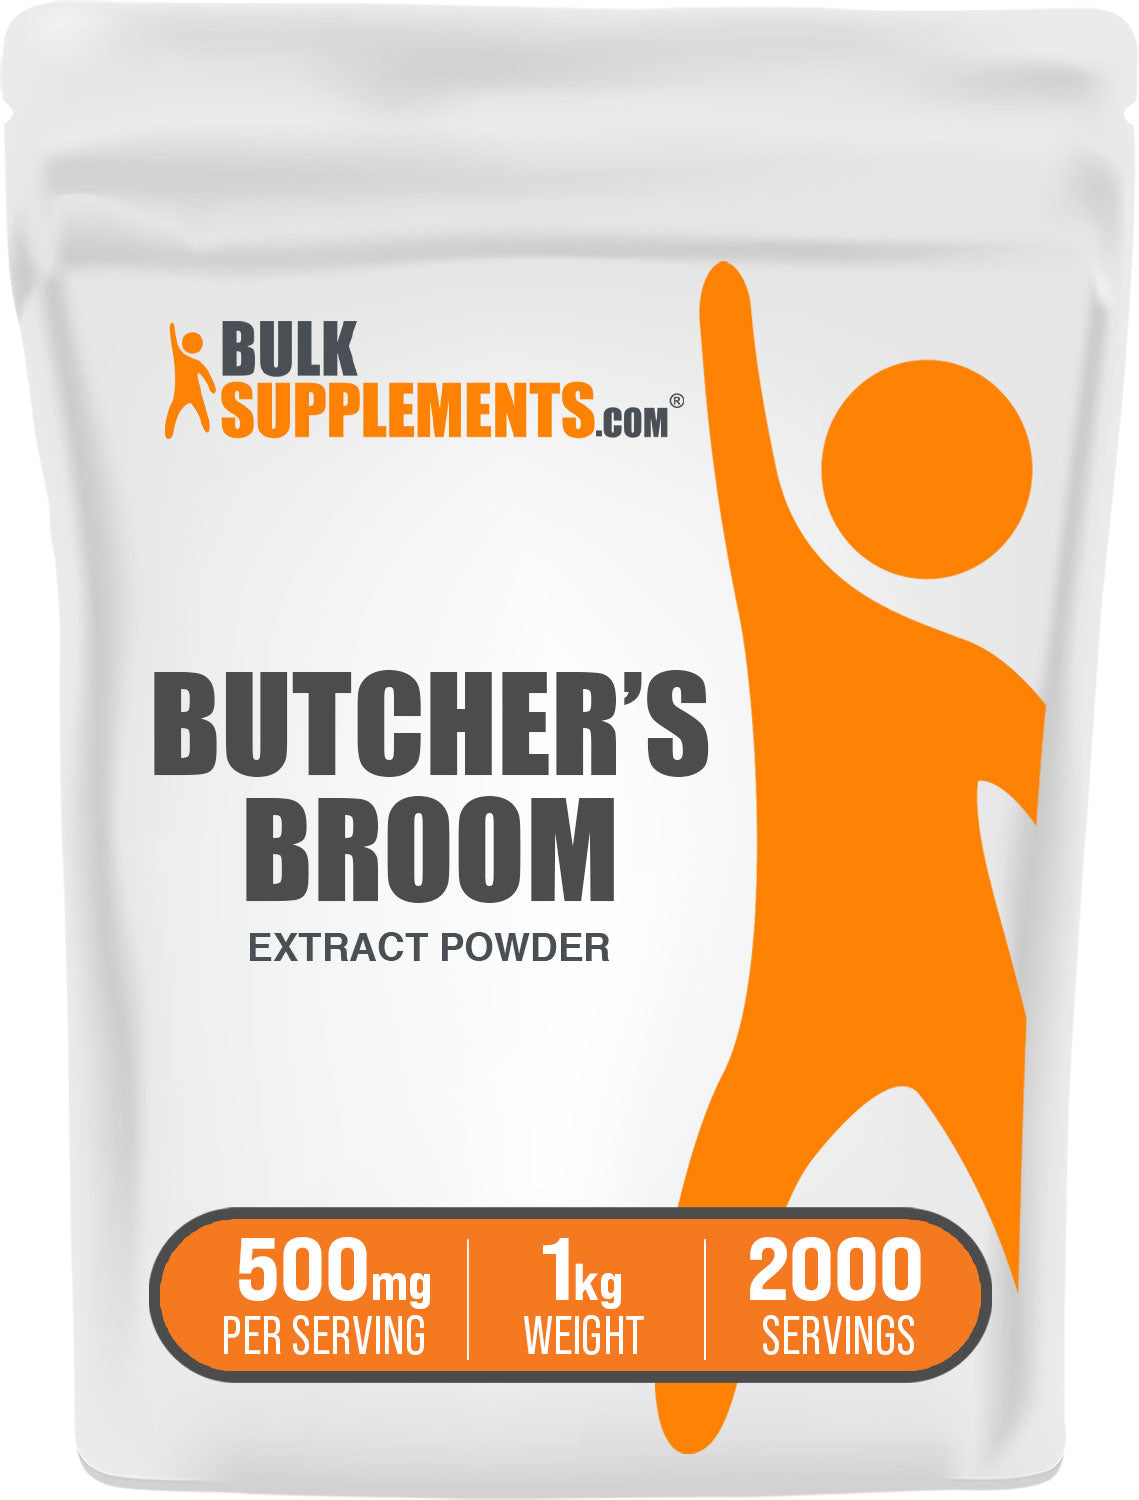 1kg of butchers broom